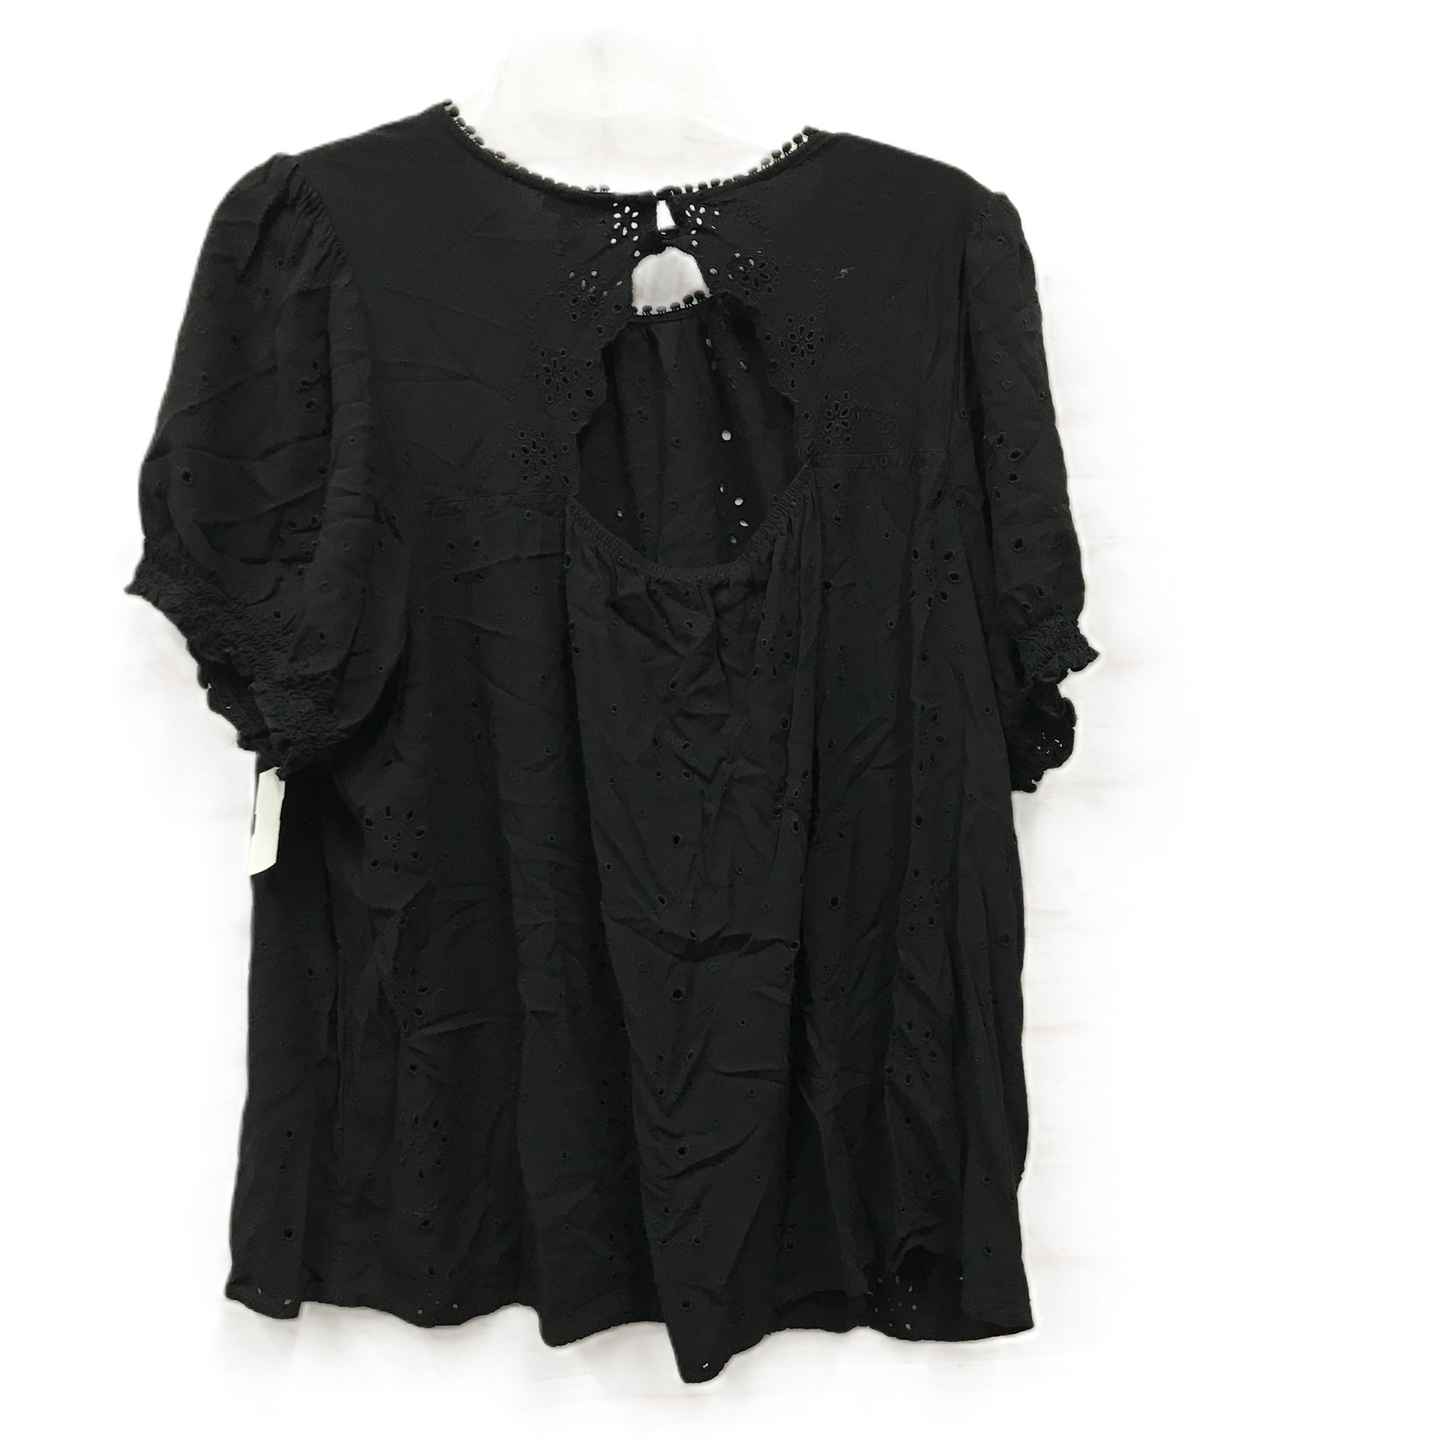 Black Top Short Sleeve By Torrid, Size: 3x